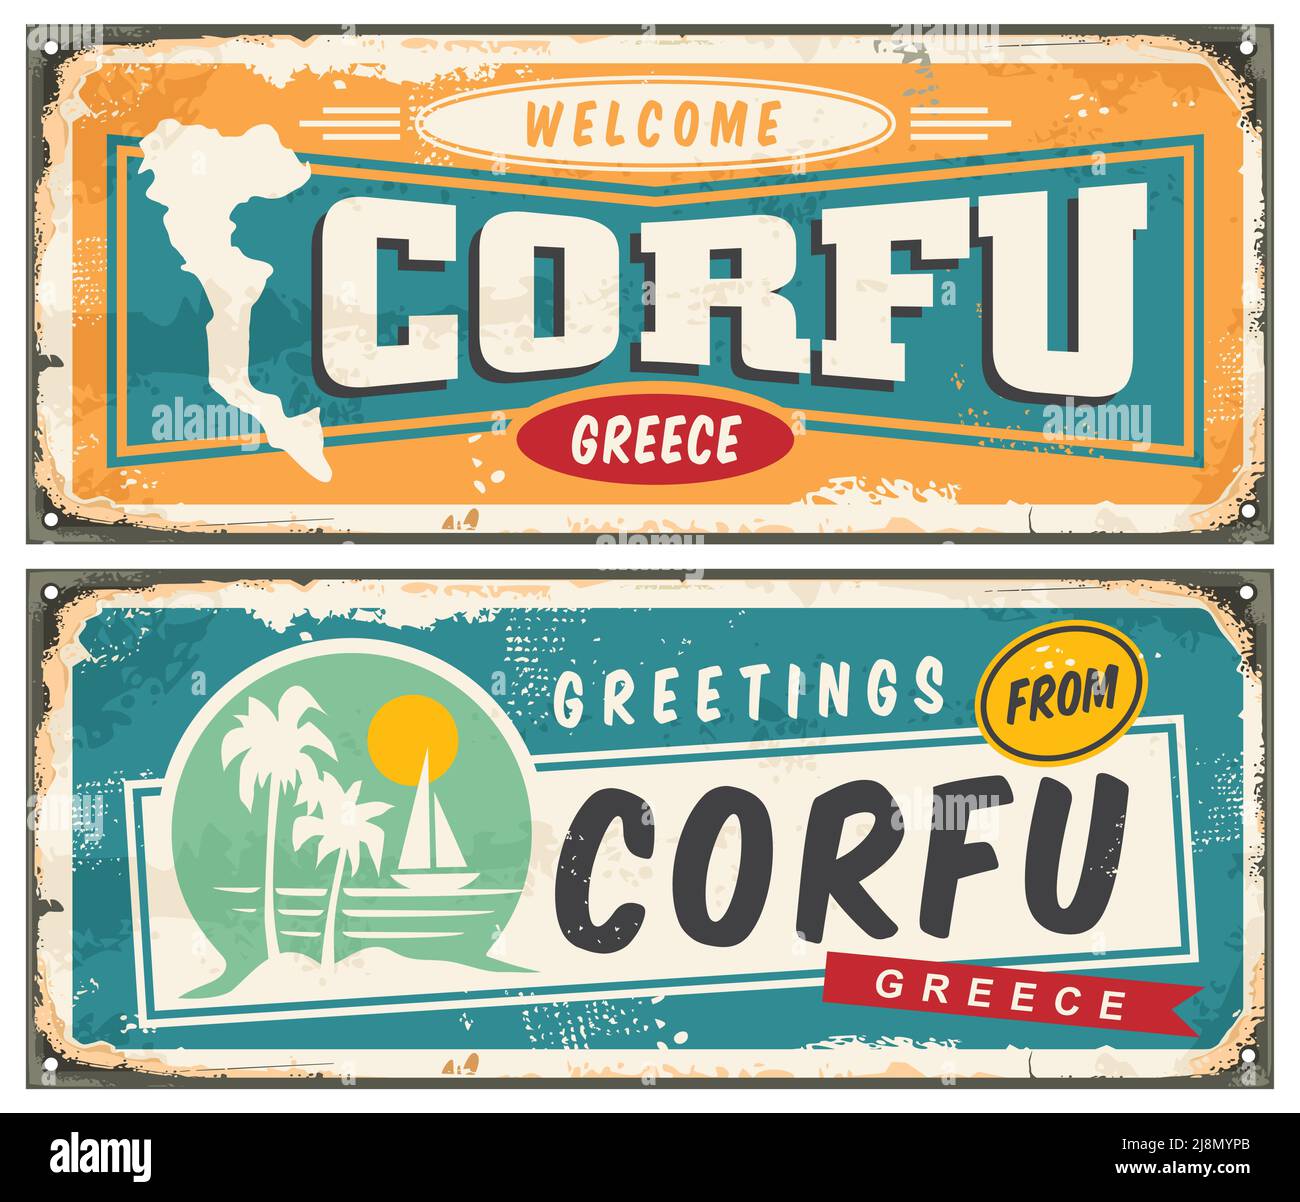 Corfu Greece retro greeting card template. Vintage sign souvenir idea for summer vacation destinations in Greece. Travel to Corfu vector illustration. Stock Vector